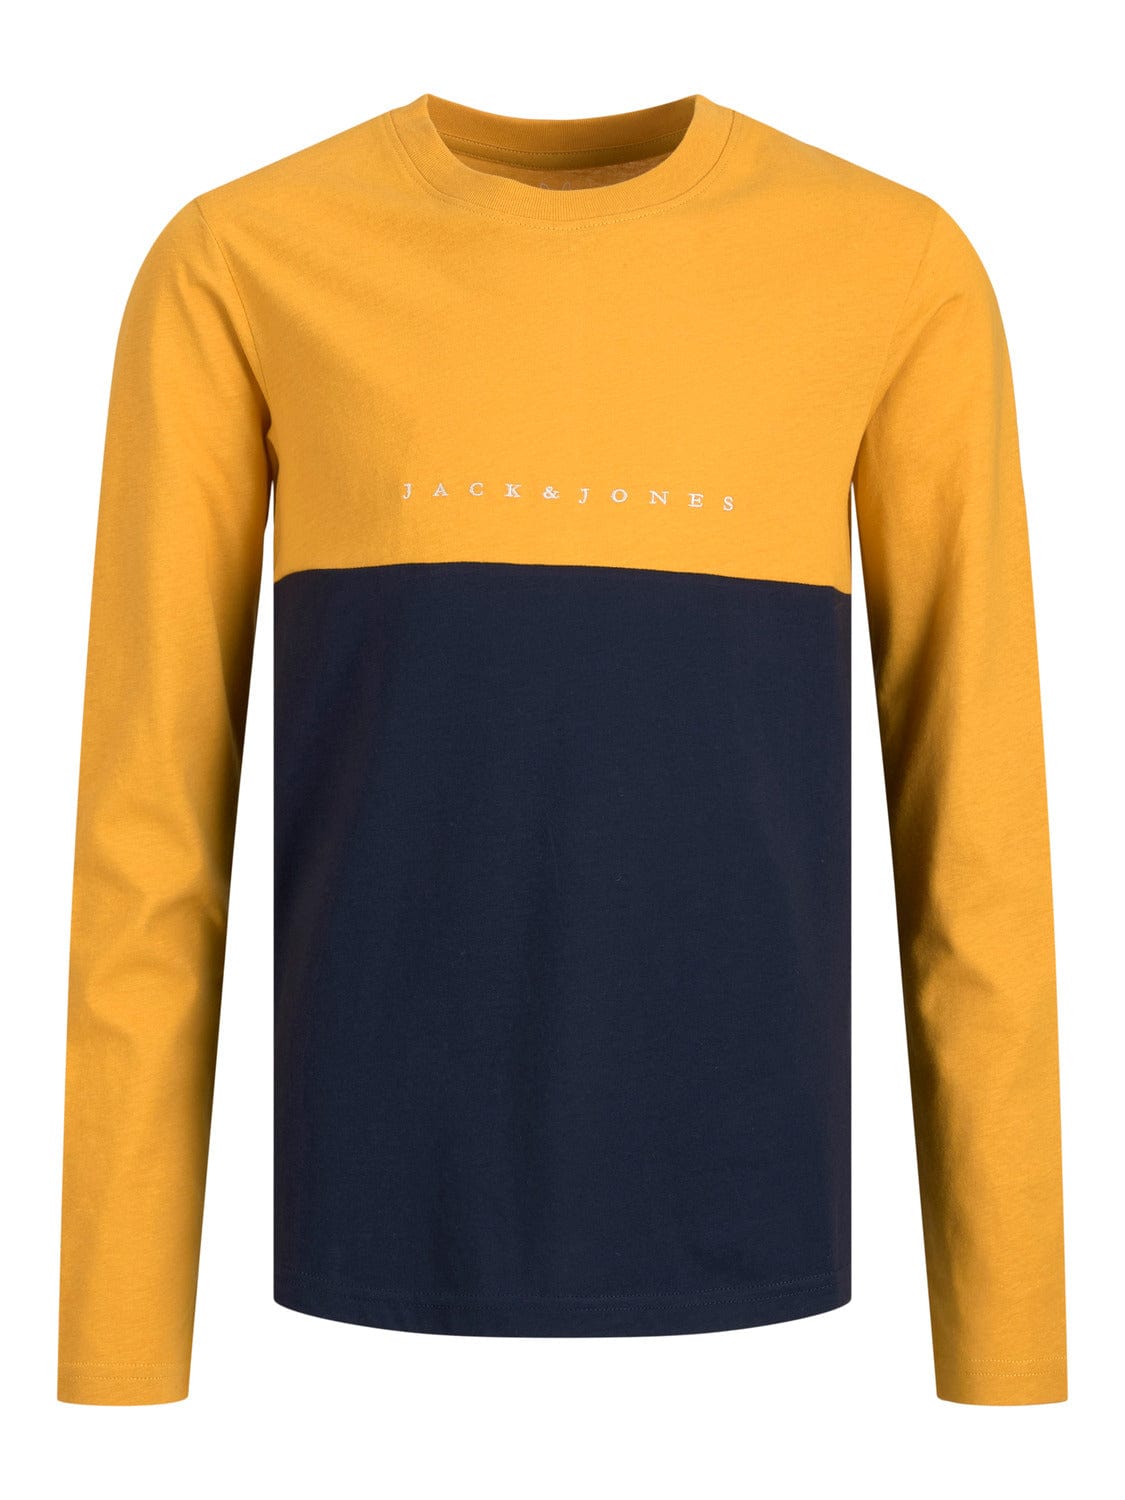 Camiseta de manga larga bicolor amarilla y azul marina - JORCOPENHAGEN